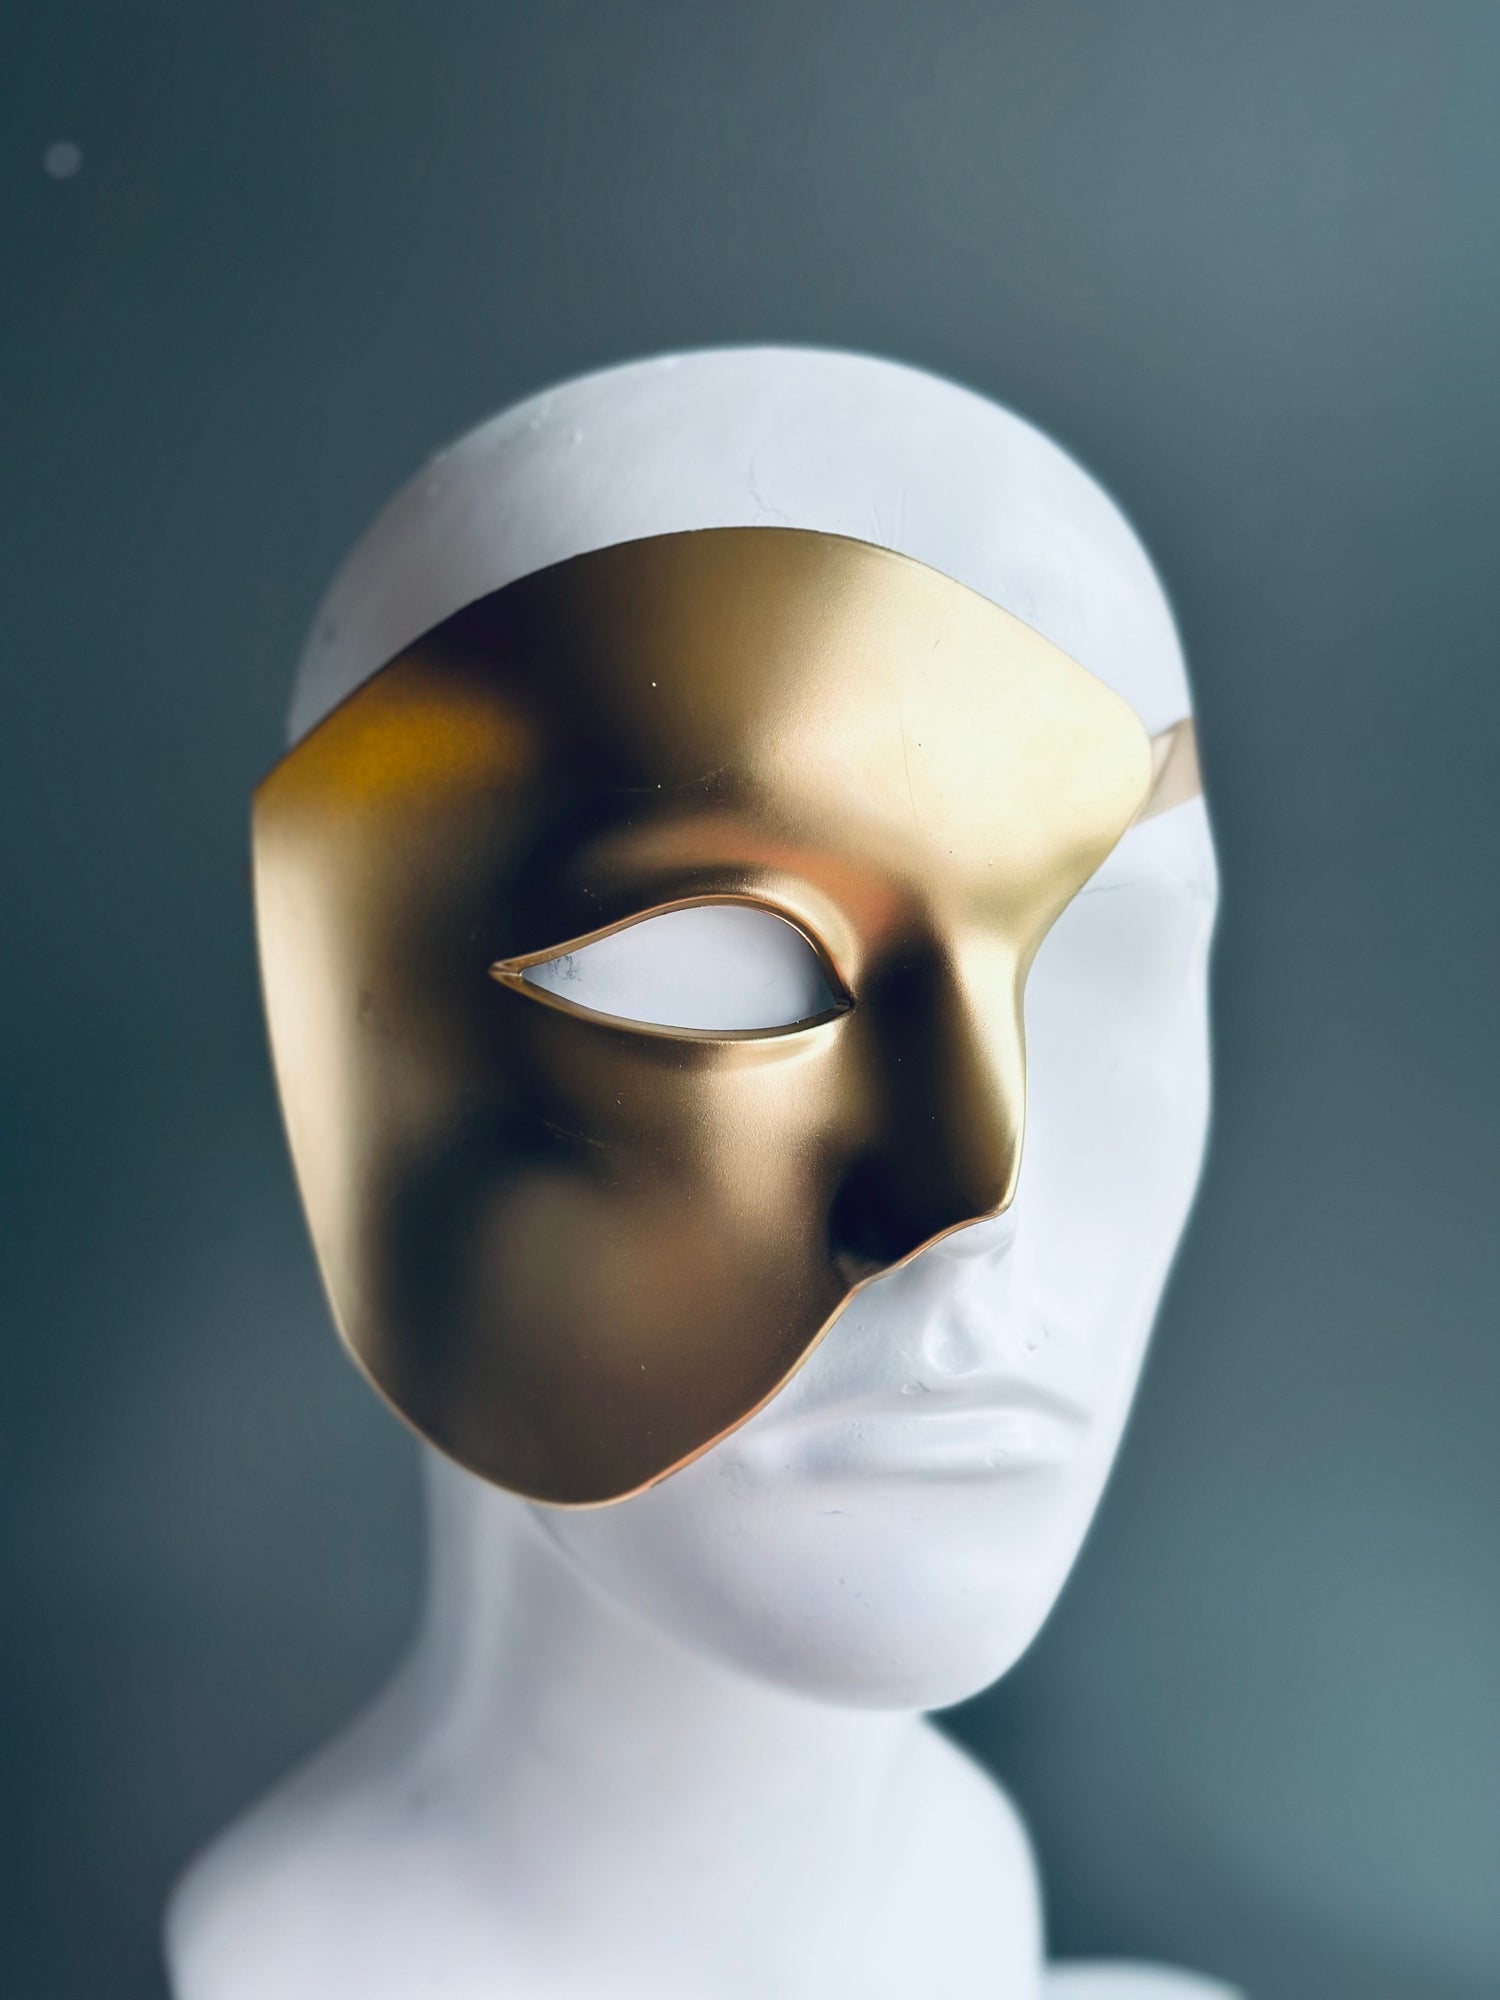 Phantom of the Opera Half Face Masquerade Mask - Gold